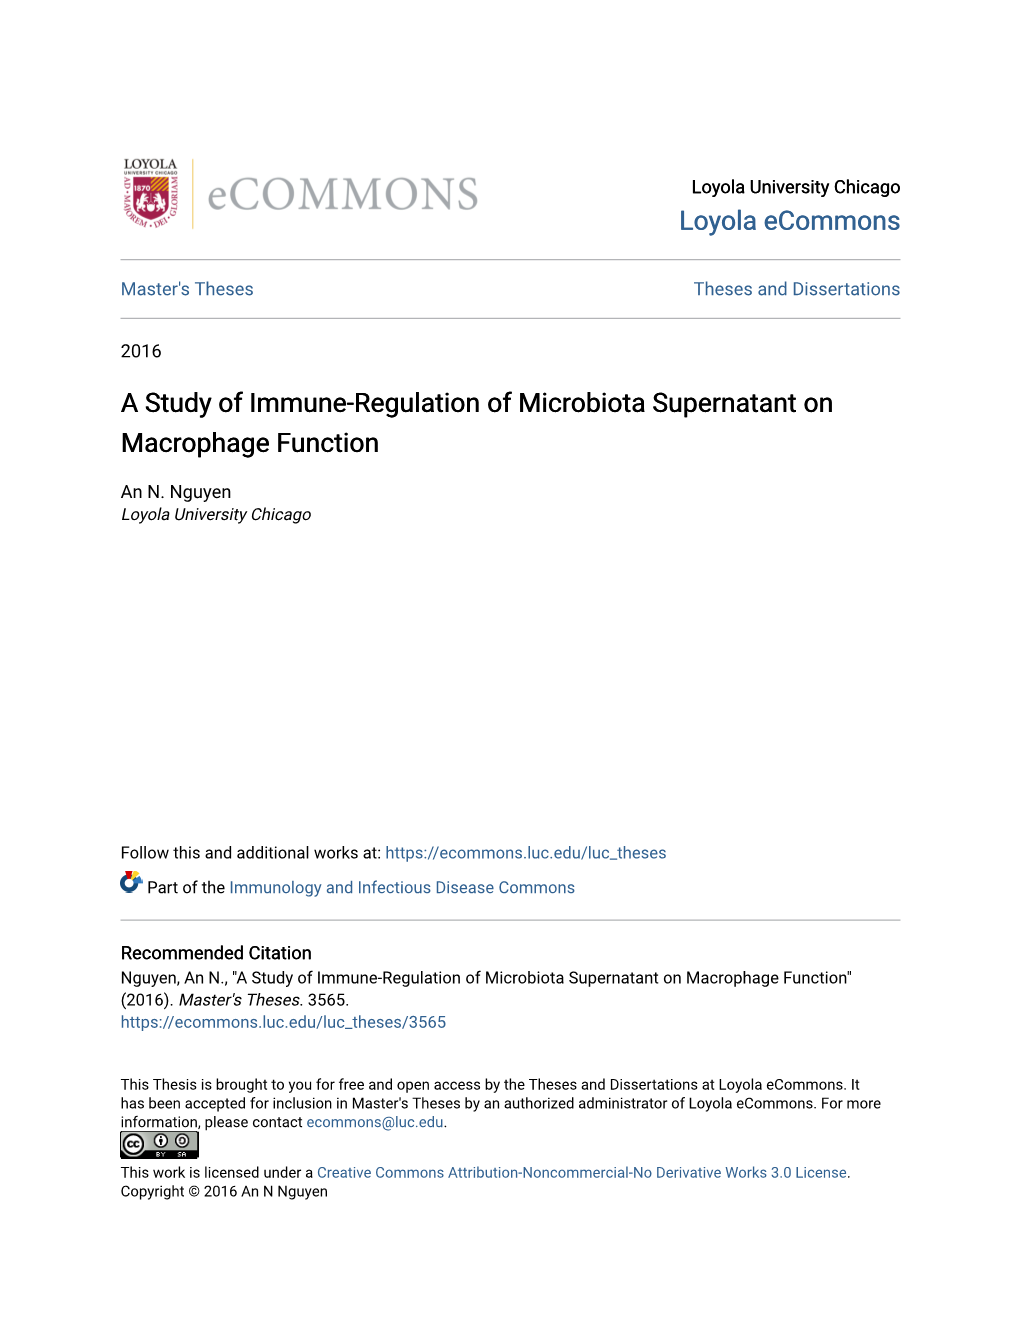 A Study of Immune-Regulation of Microbiota Supernatant on Macrophage Function